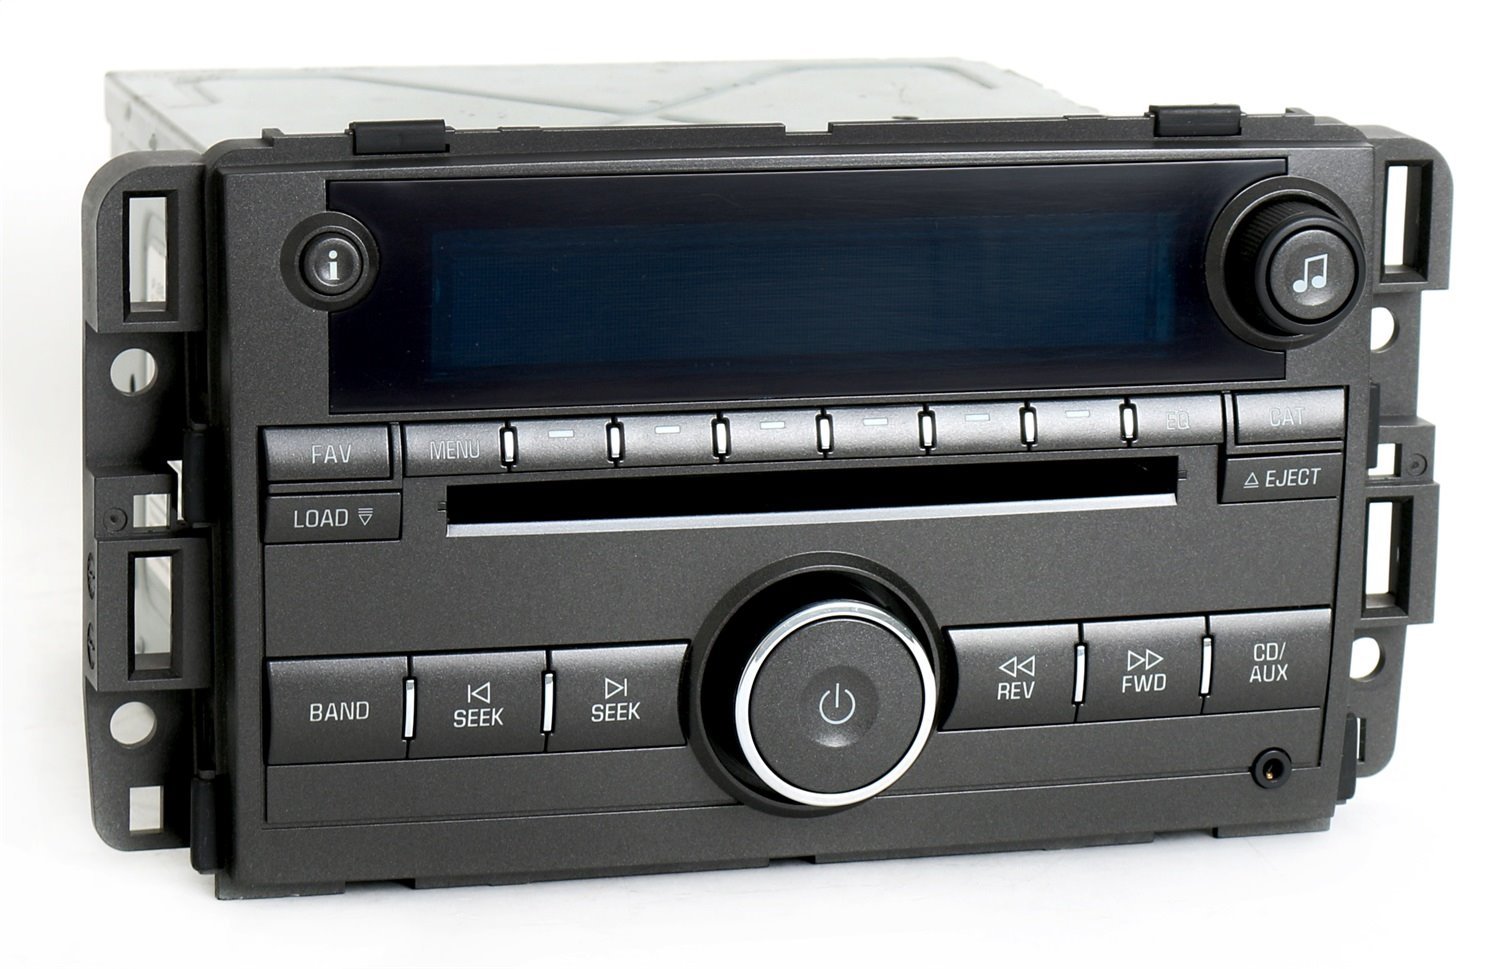 Buick Lucerne 2007 Gray Radio AM FM 6 Disc mp3 CD Player 15797876 Unlocked